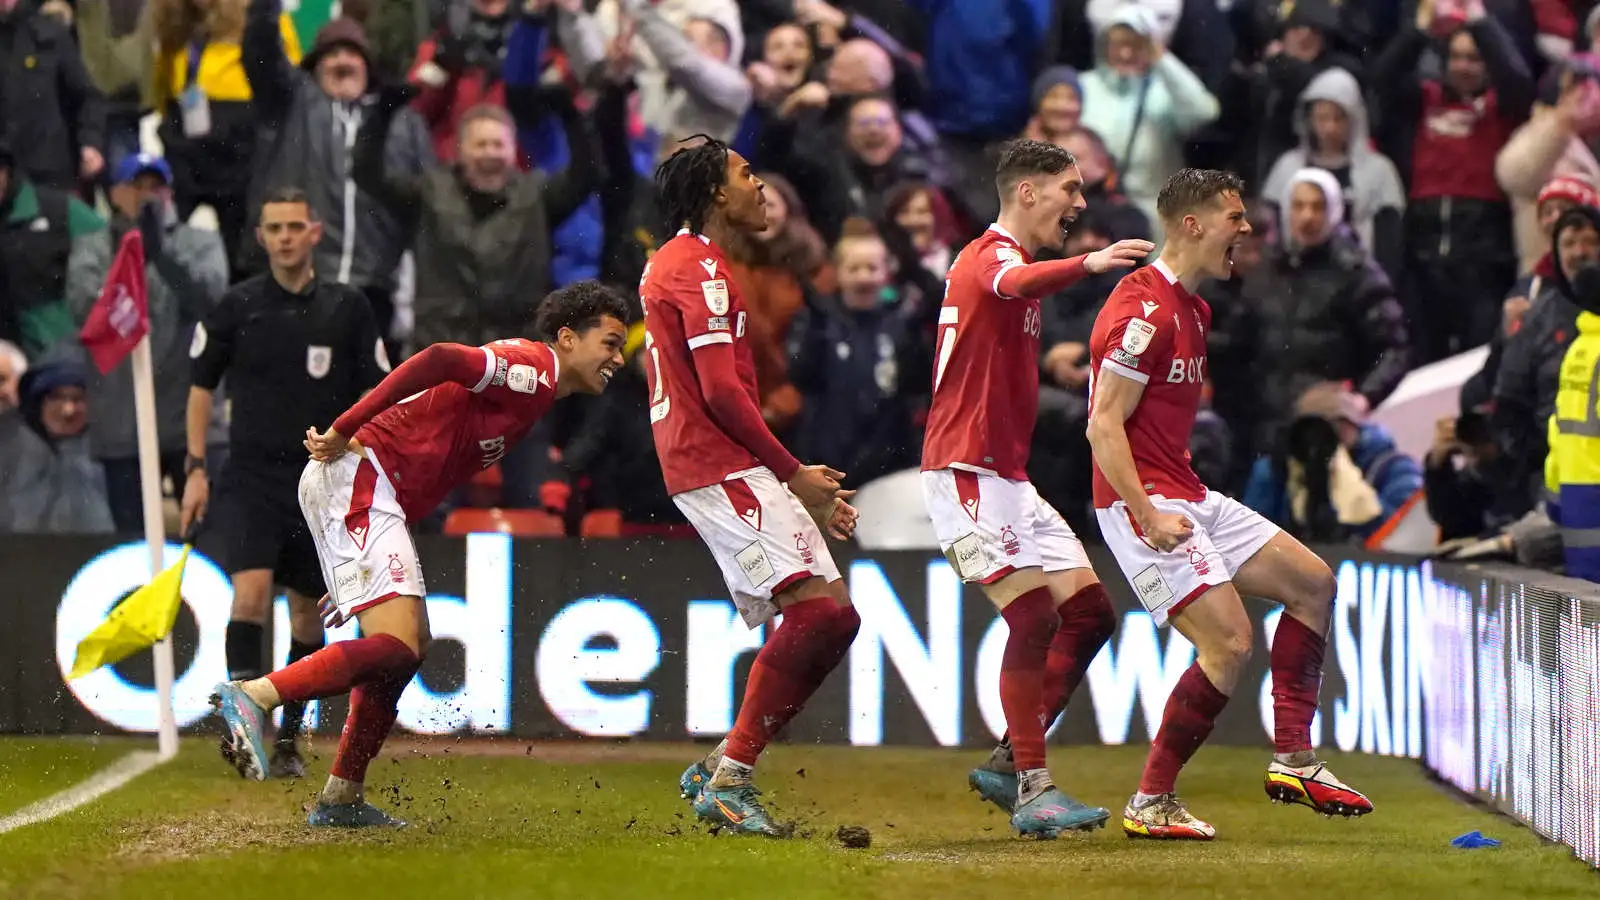 Championship club Nottingham Forest players celebrate scoring